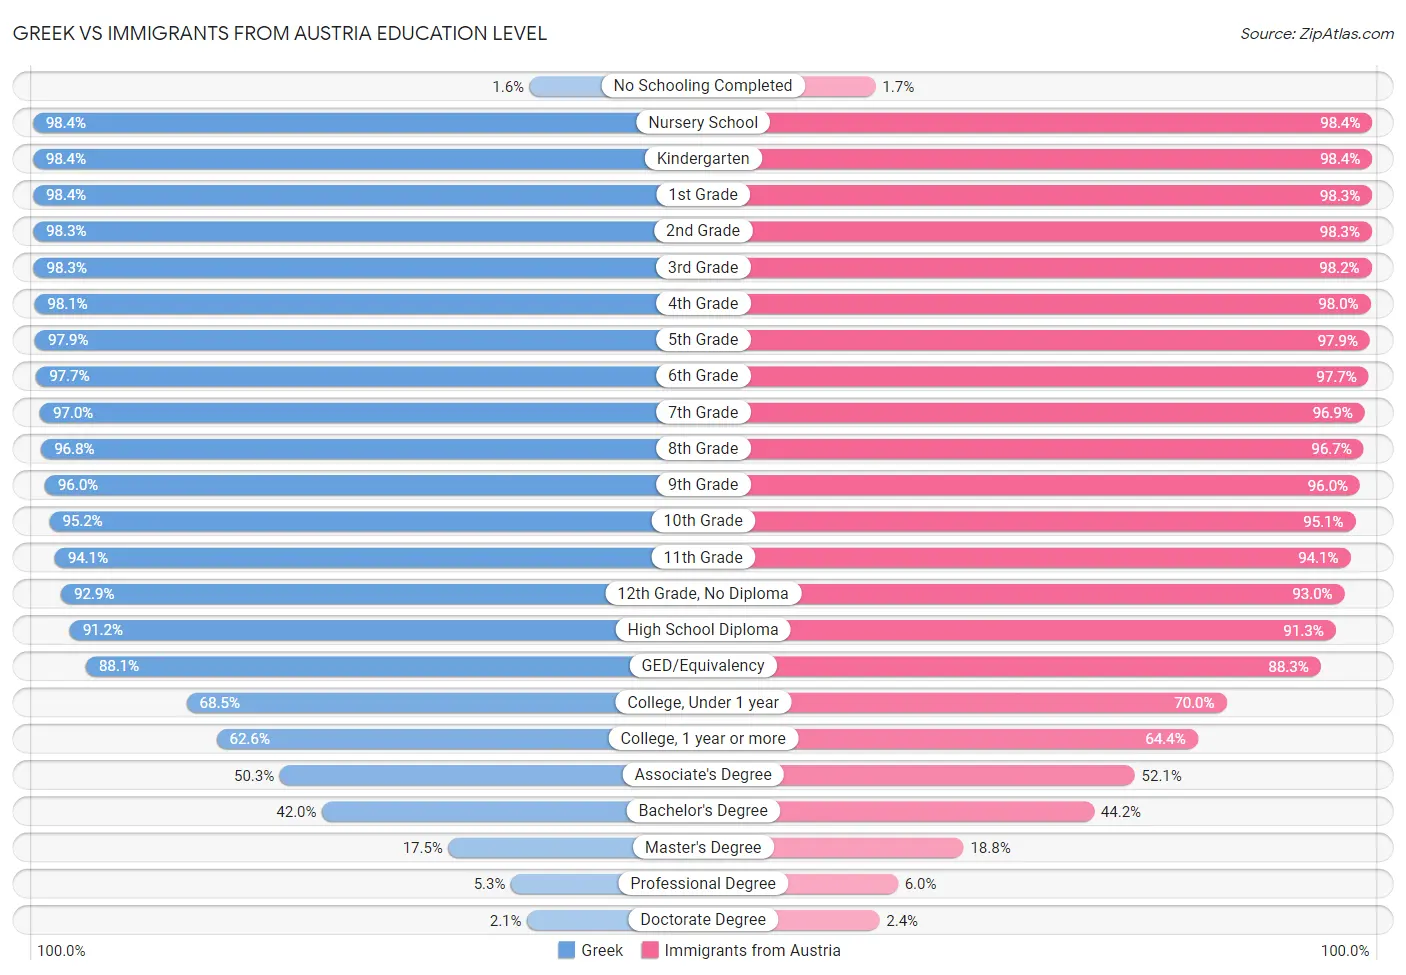 Greek vs Immigrants from Austria Education Level